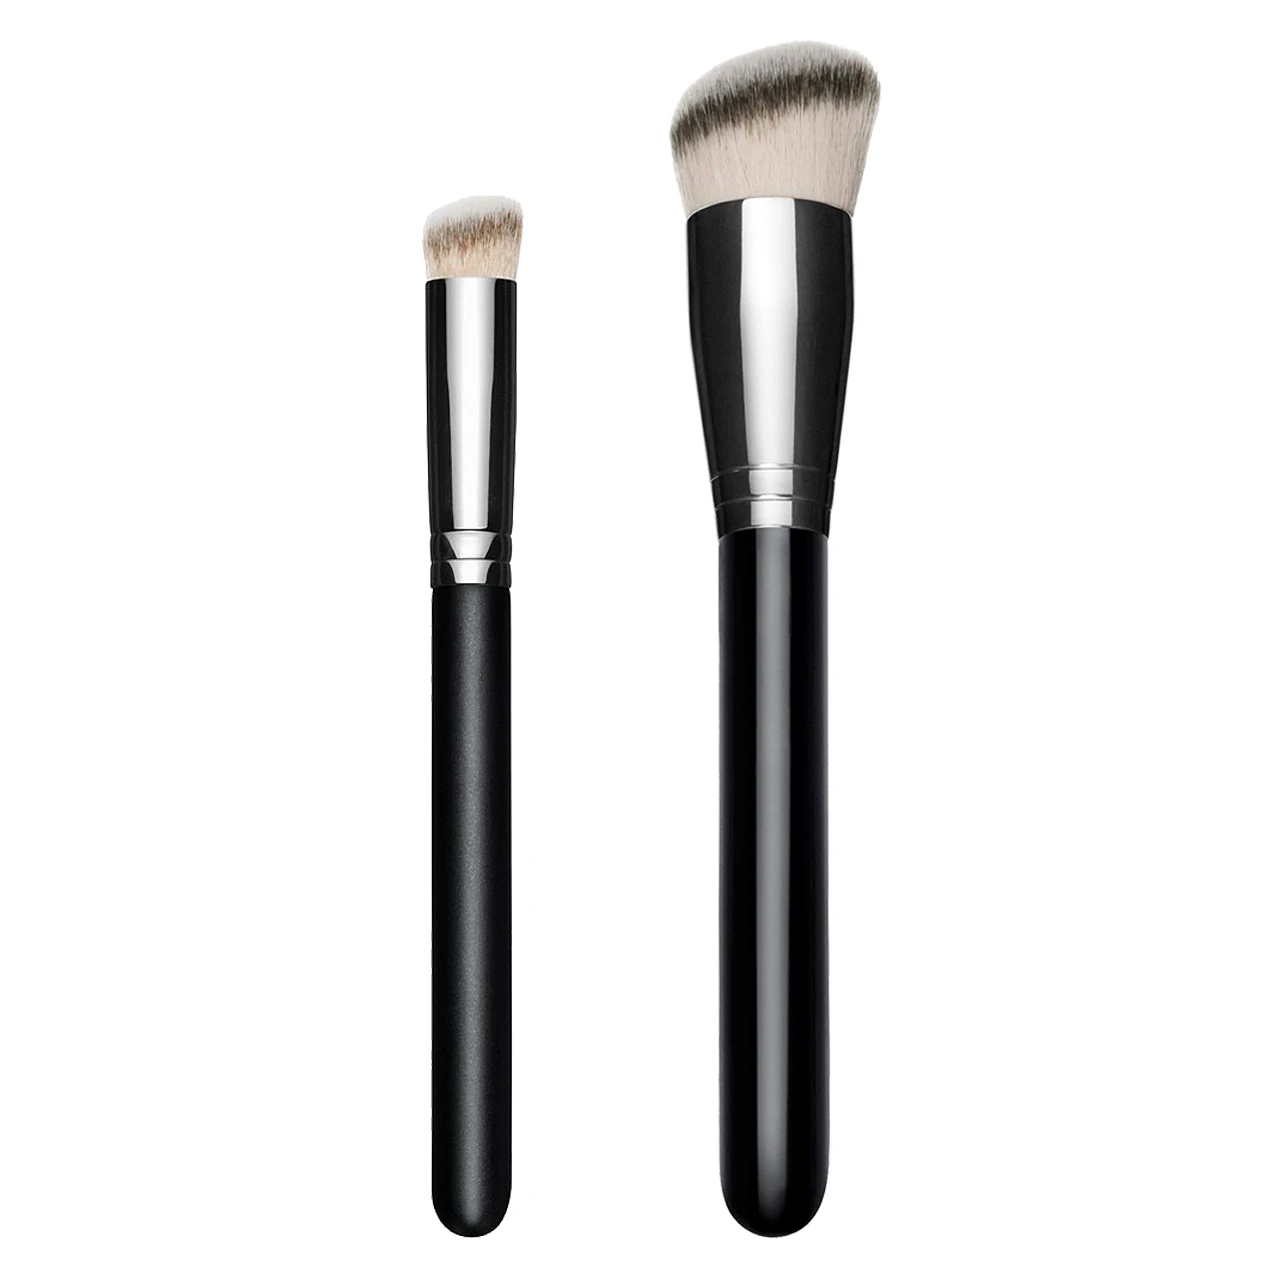 

GOGORHEA BRUSH 170 Rounded Slant Foundation Brush & 270 Concealer Brush - Synthetic Flawless Buffing Blending Makeup Brush